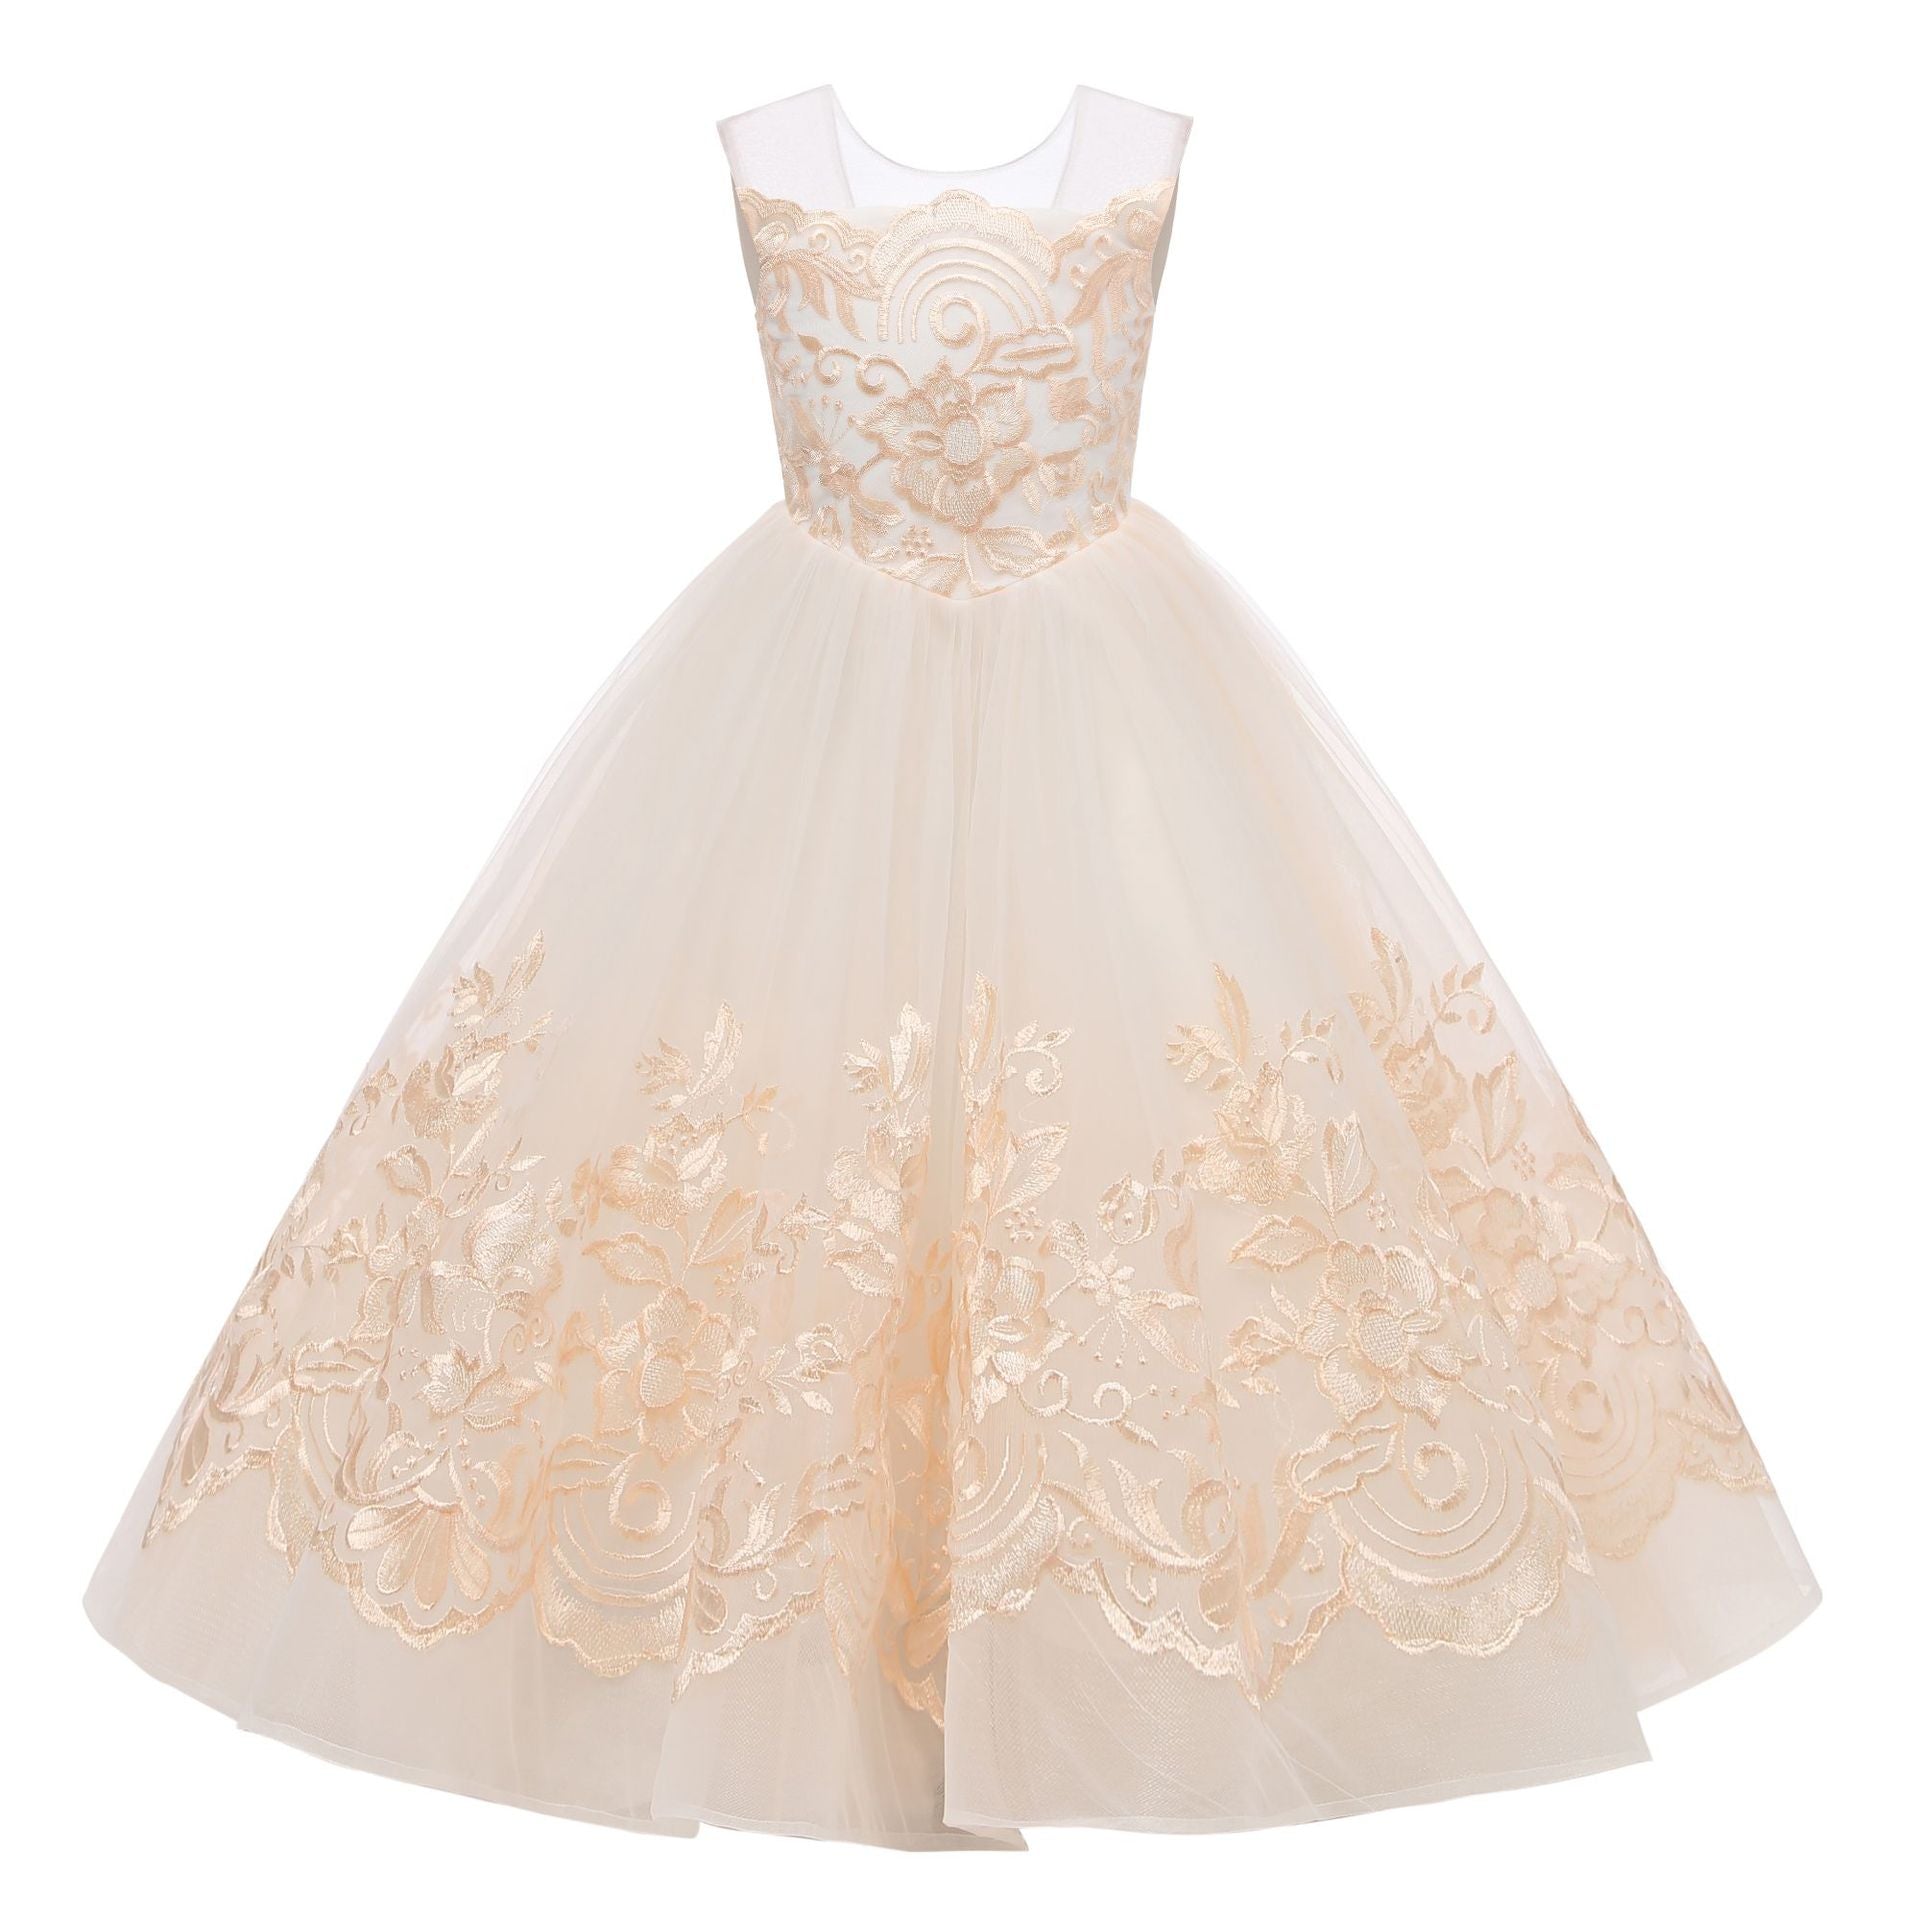 Elegant First Communion Dress Flower Girl Dress for Wedding Kids Sleevelesss Lace Pageant Ball Gowns fancy girl Birthday Dresses